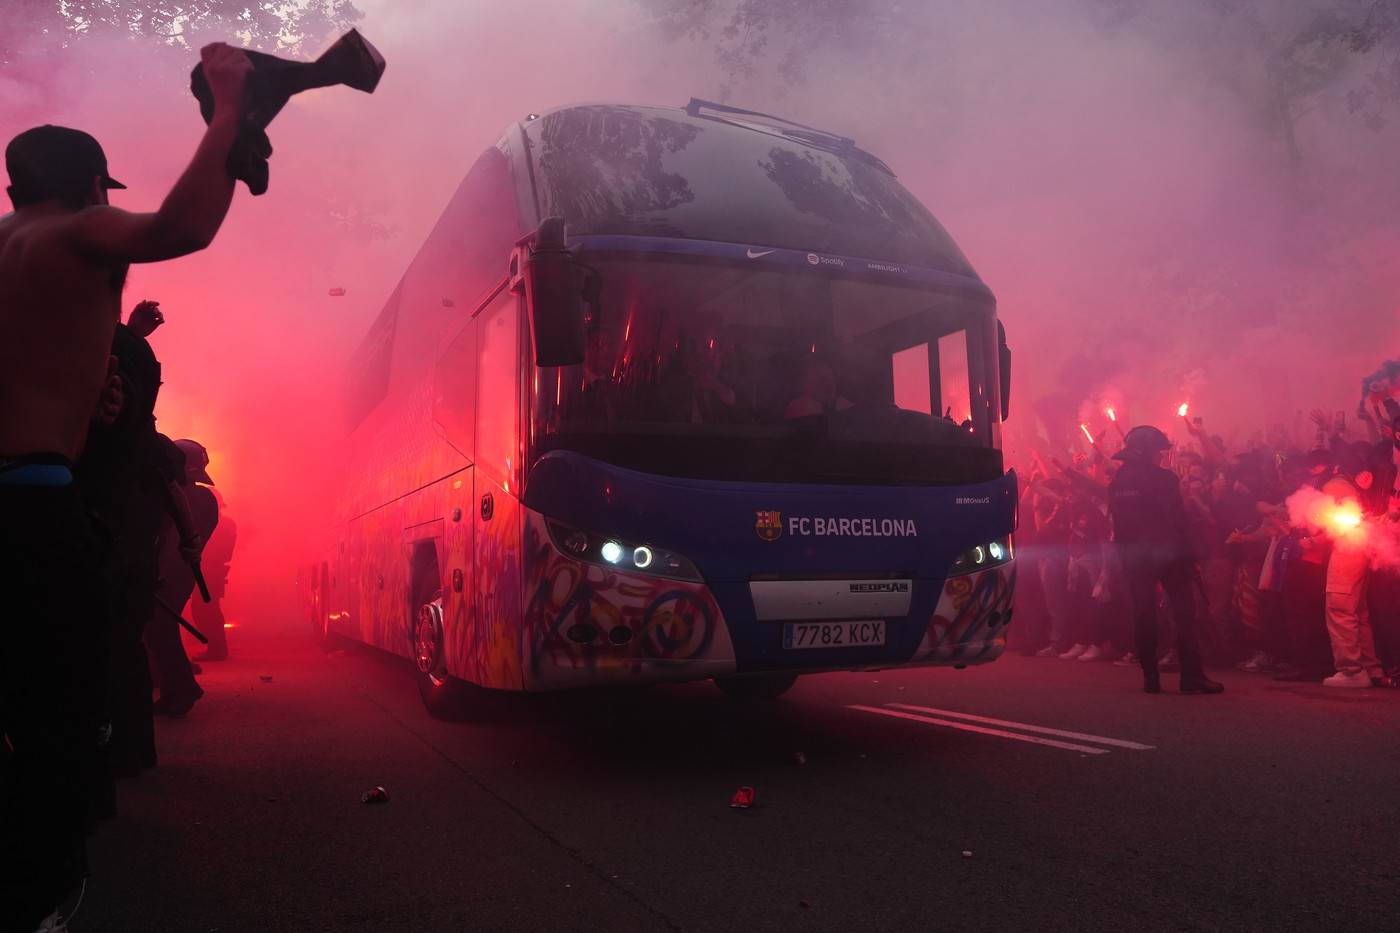  Barselona bus 